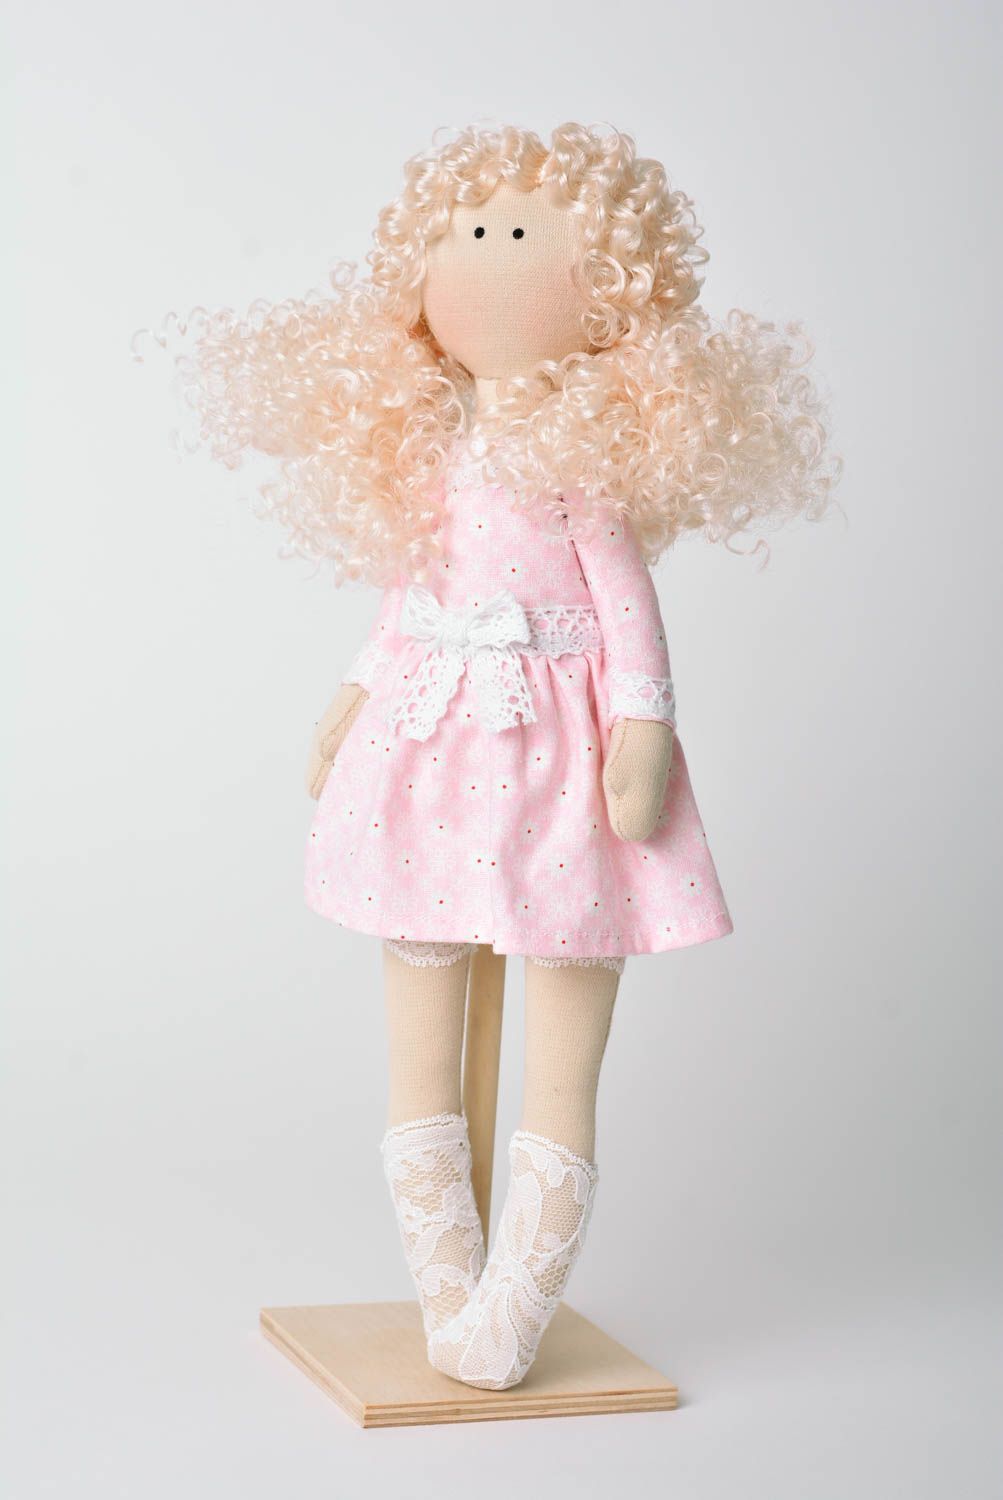 Handmade doll fabric doll designer rag doll interior decor gift ideas photo 1